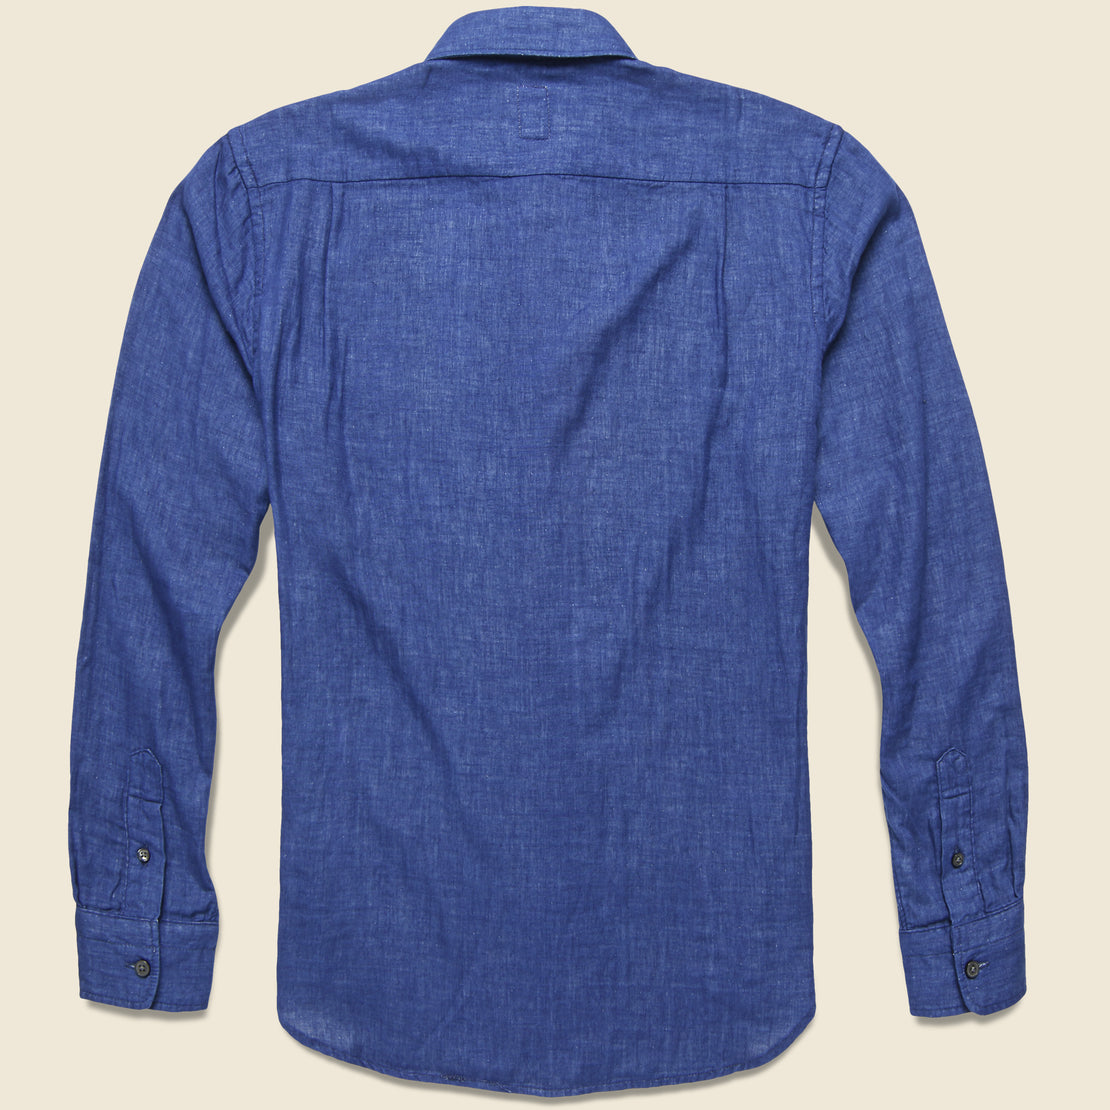 Vintage Double Gauze Shirt - Dark Indigo - KATO - STAG Provisions - Tops - L/S Woven - Solid